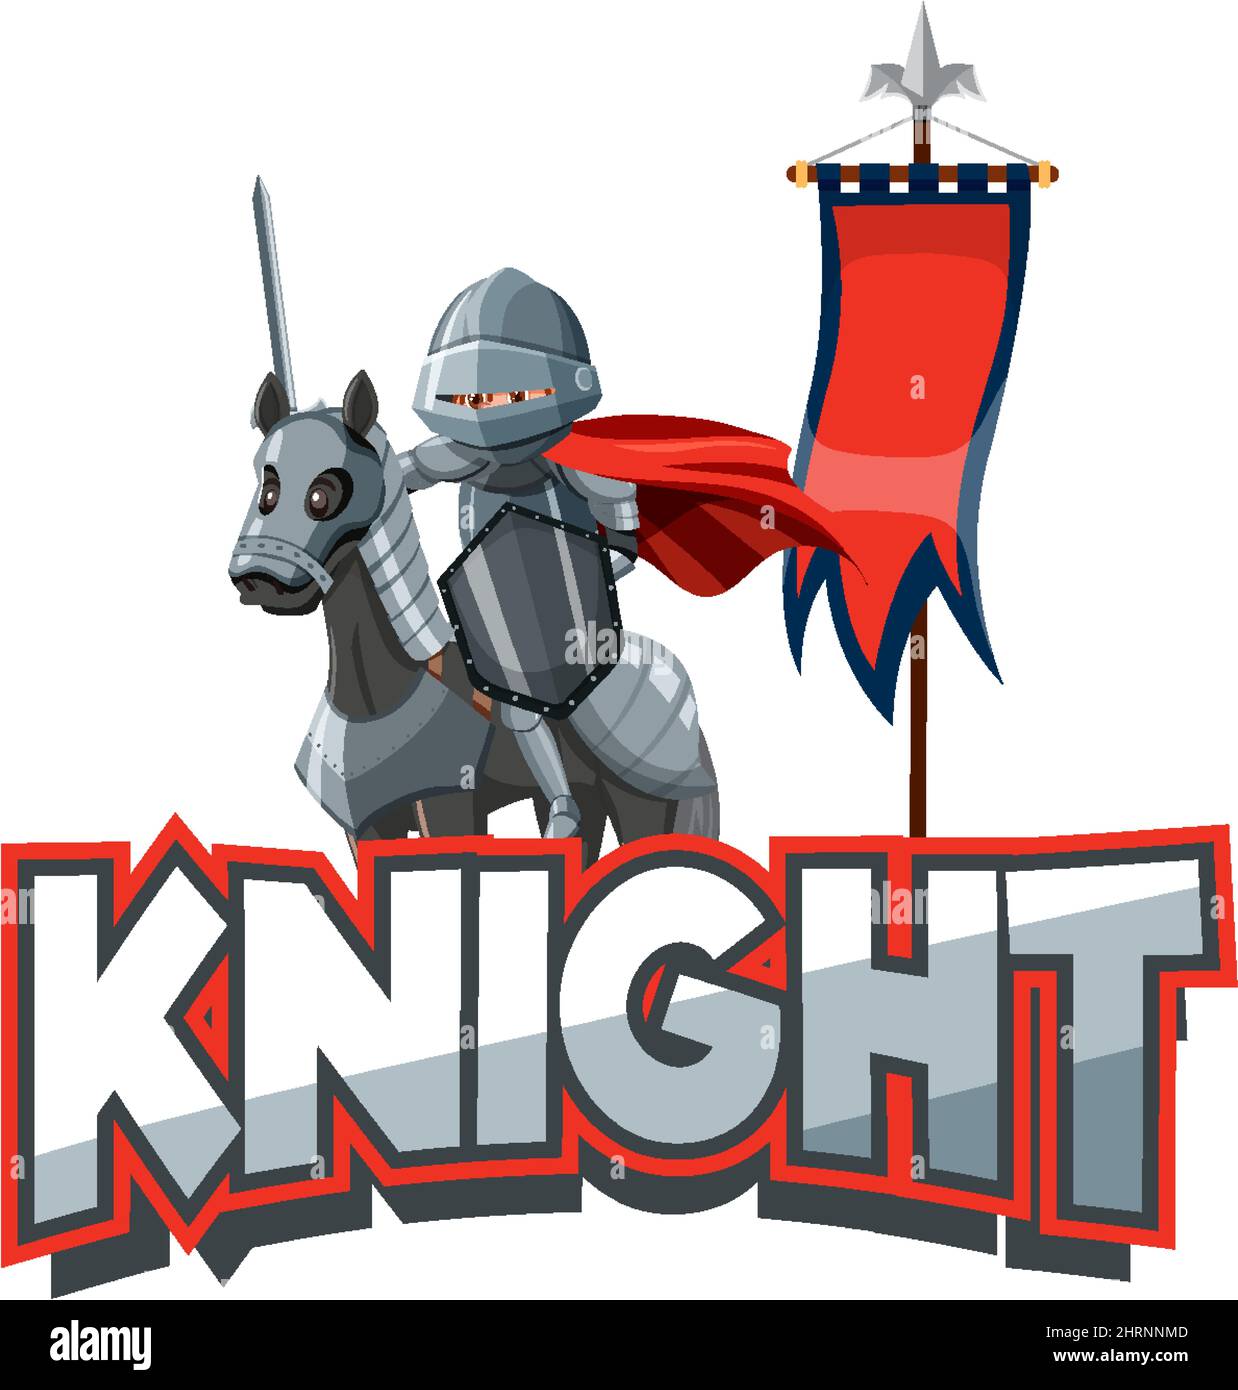 Medievil knight logo on white background illustration Stock Vector